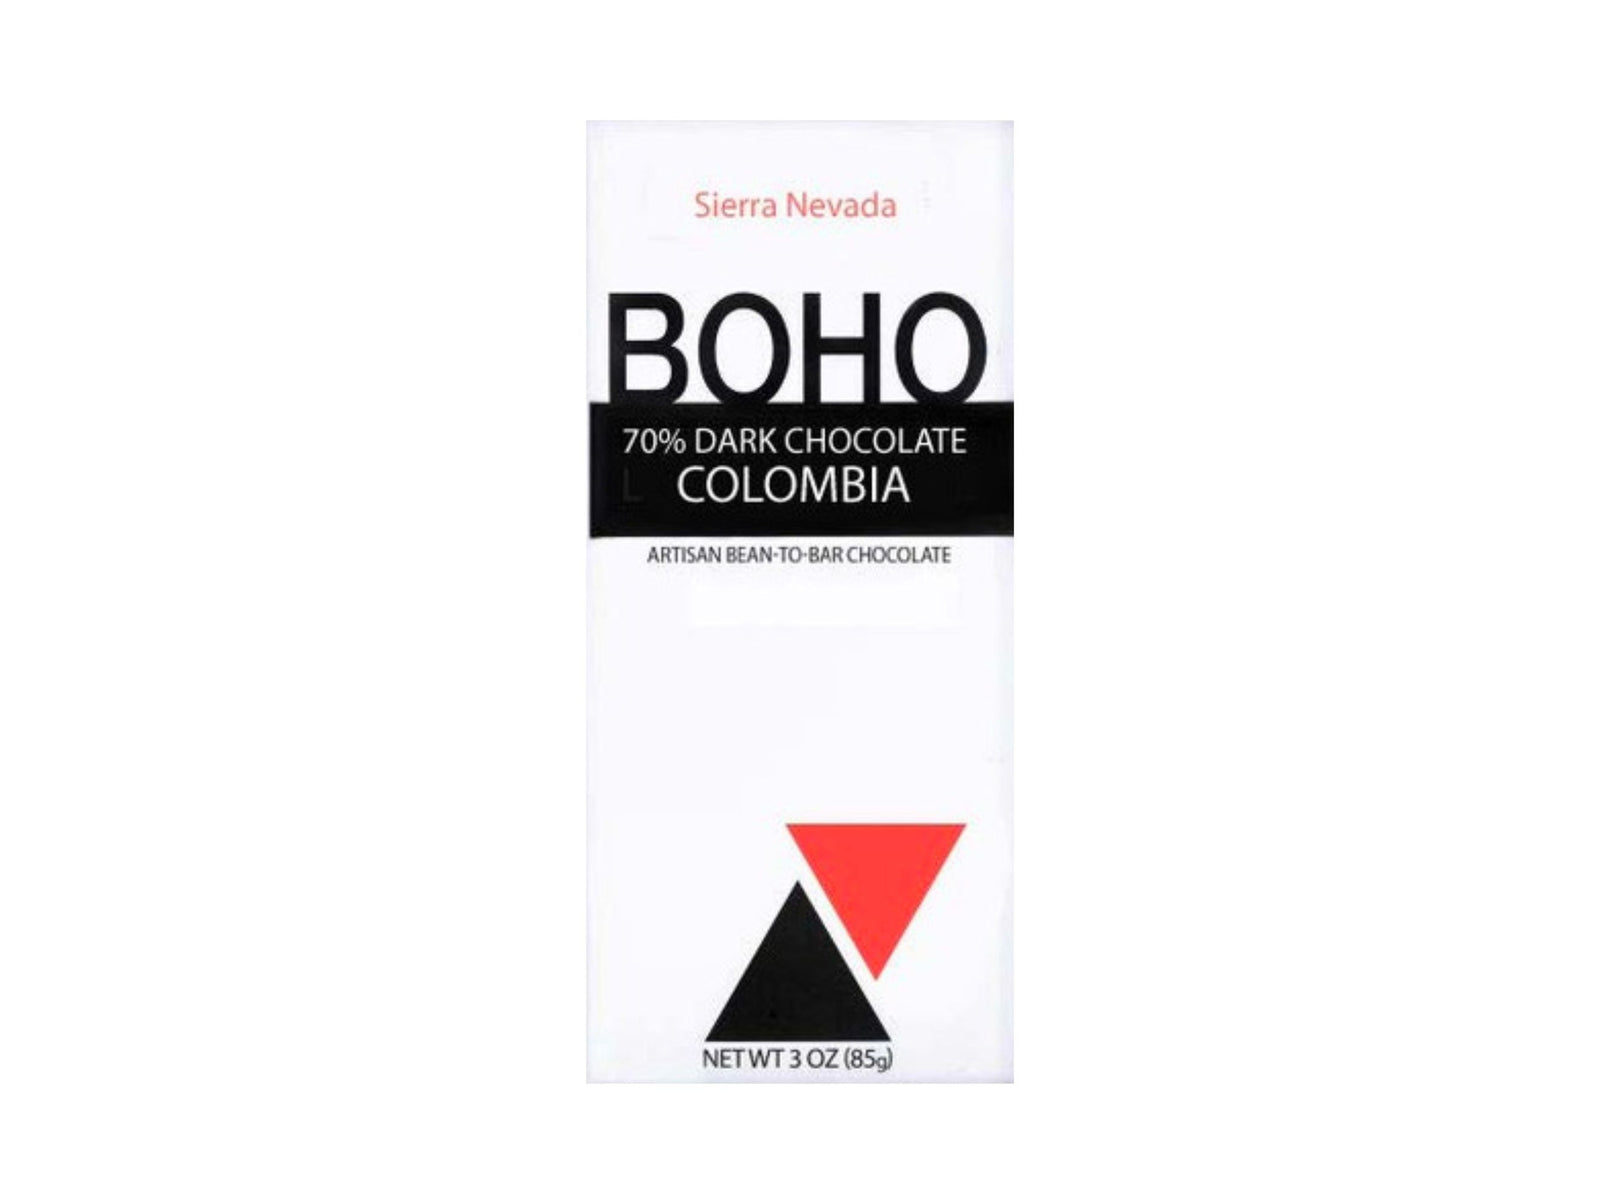 Boho Chocolate - Colombia, Sierra Nevada 70% | Dairy-free Chocolate Brand